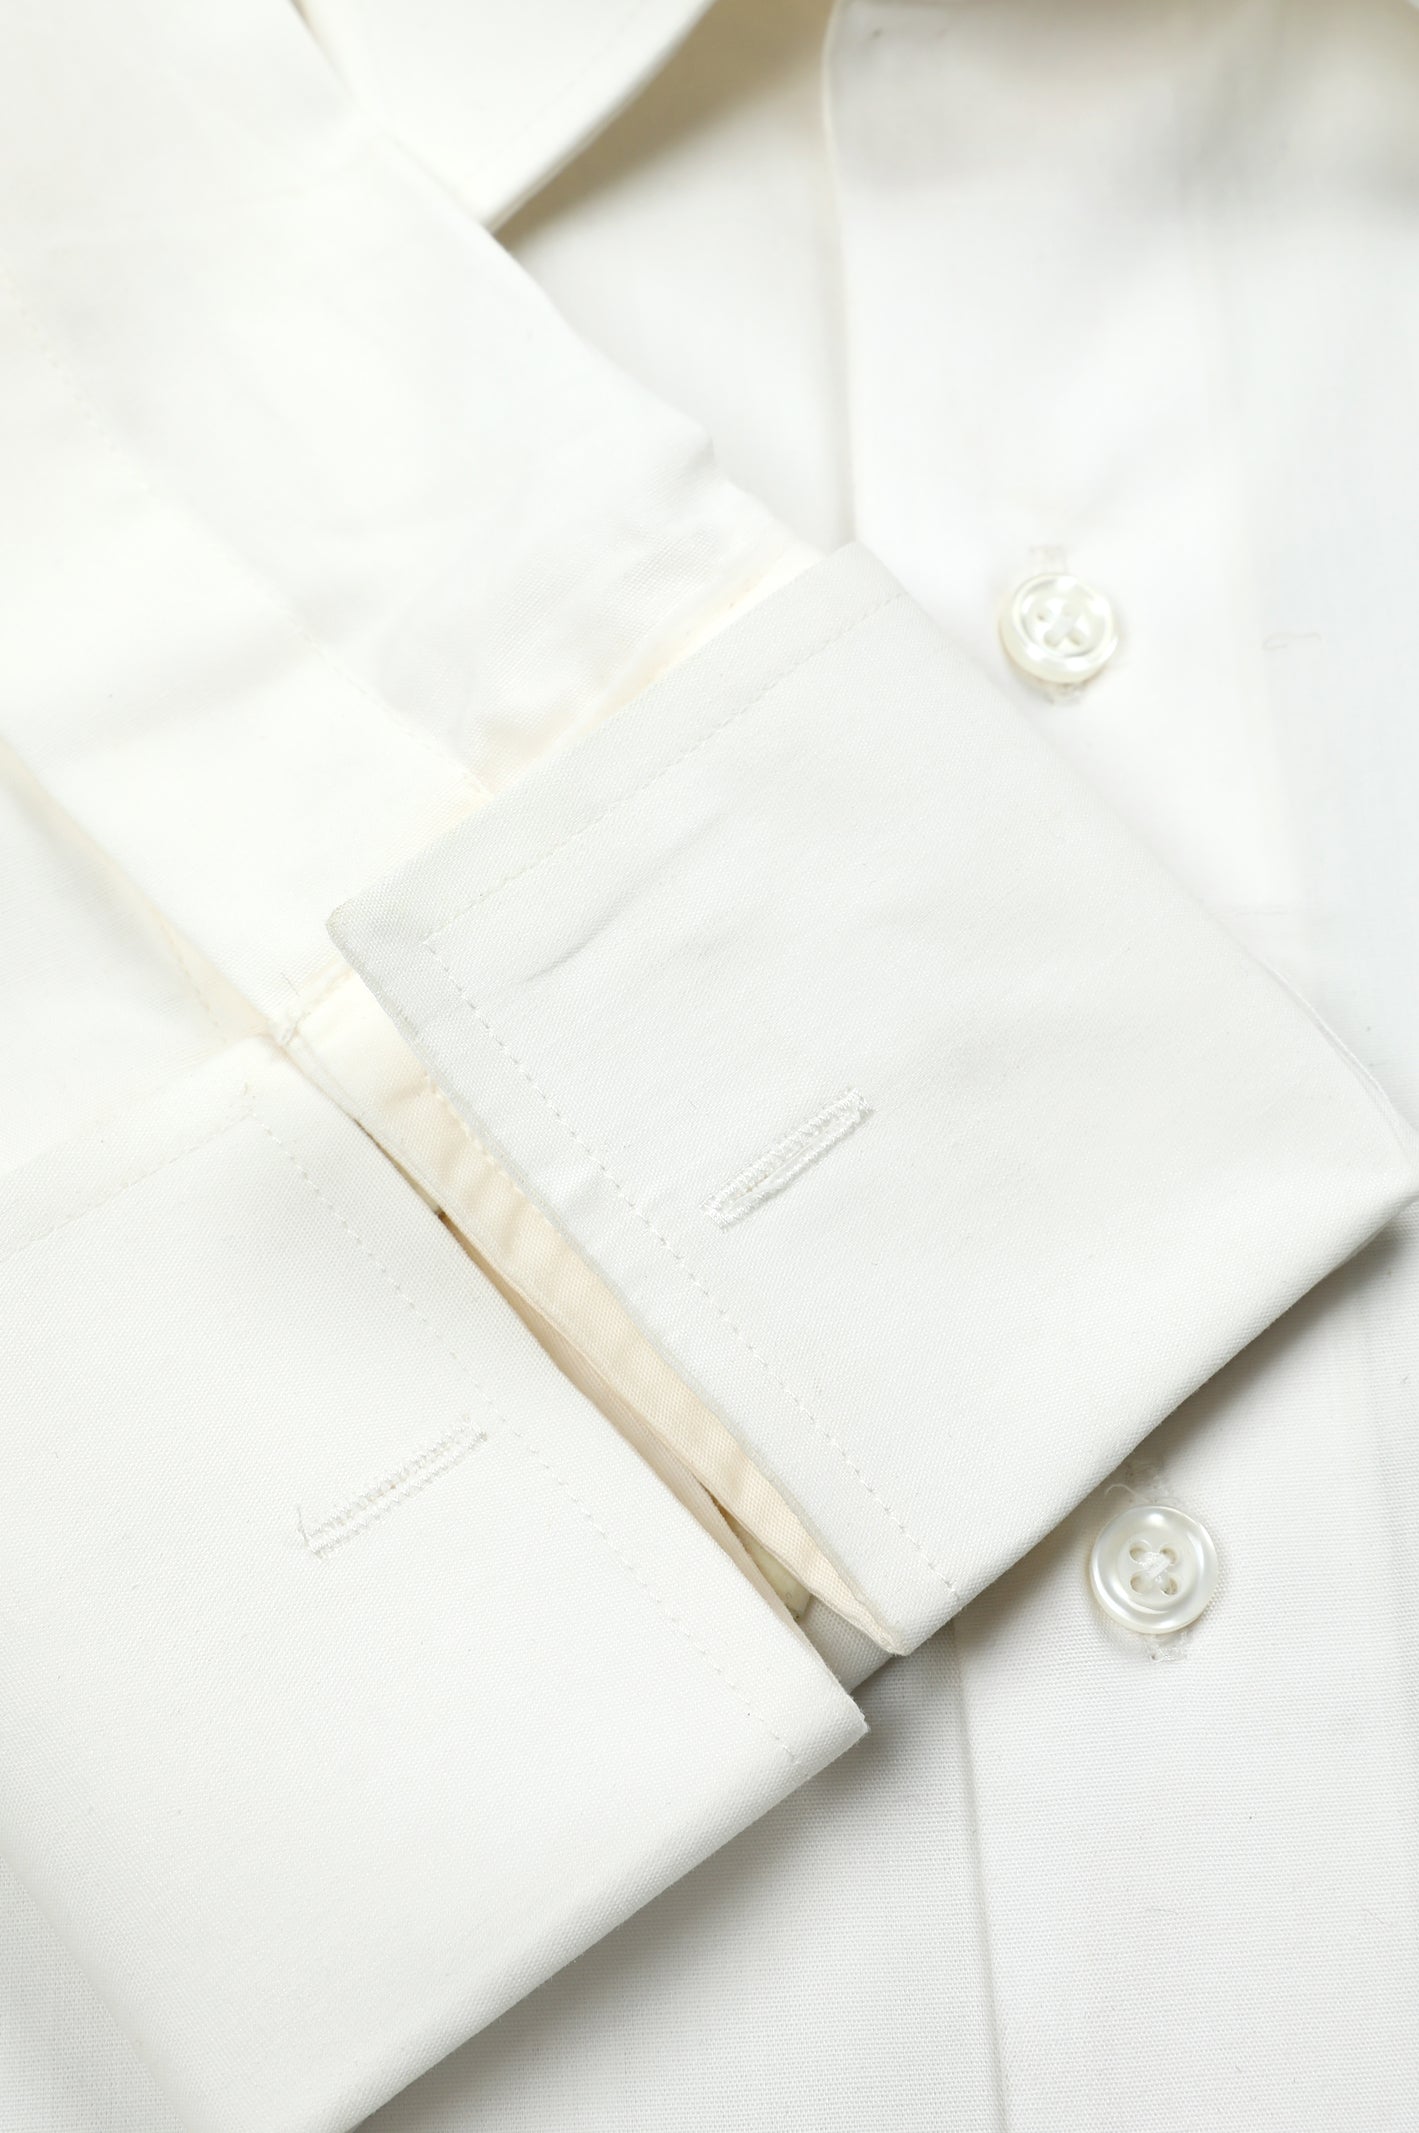 Formal Plain Shirt  SKU: AB205-OFFWHITE - Diners